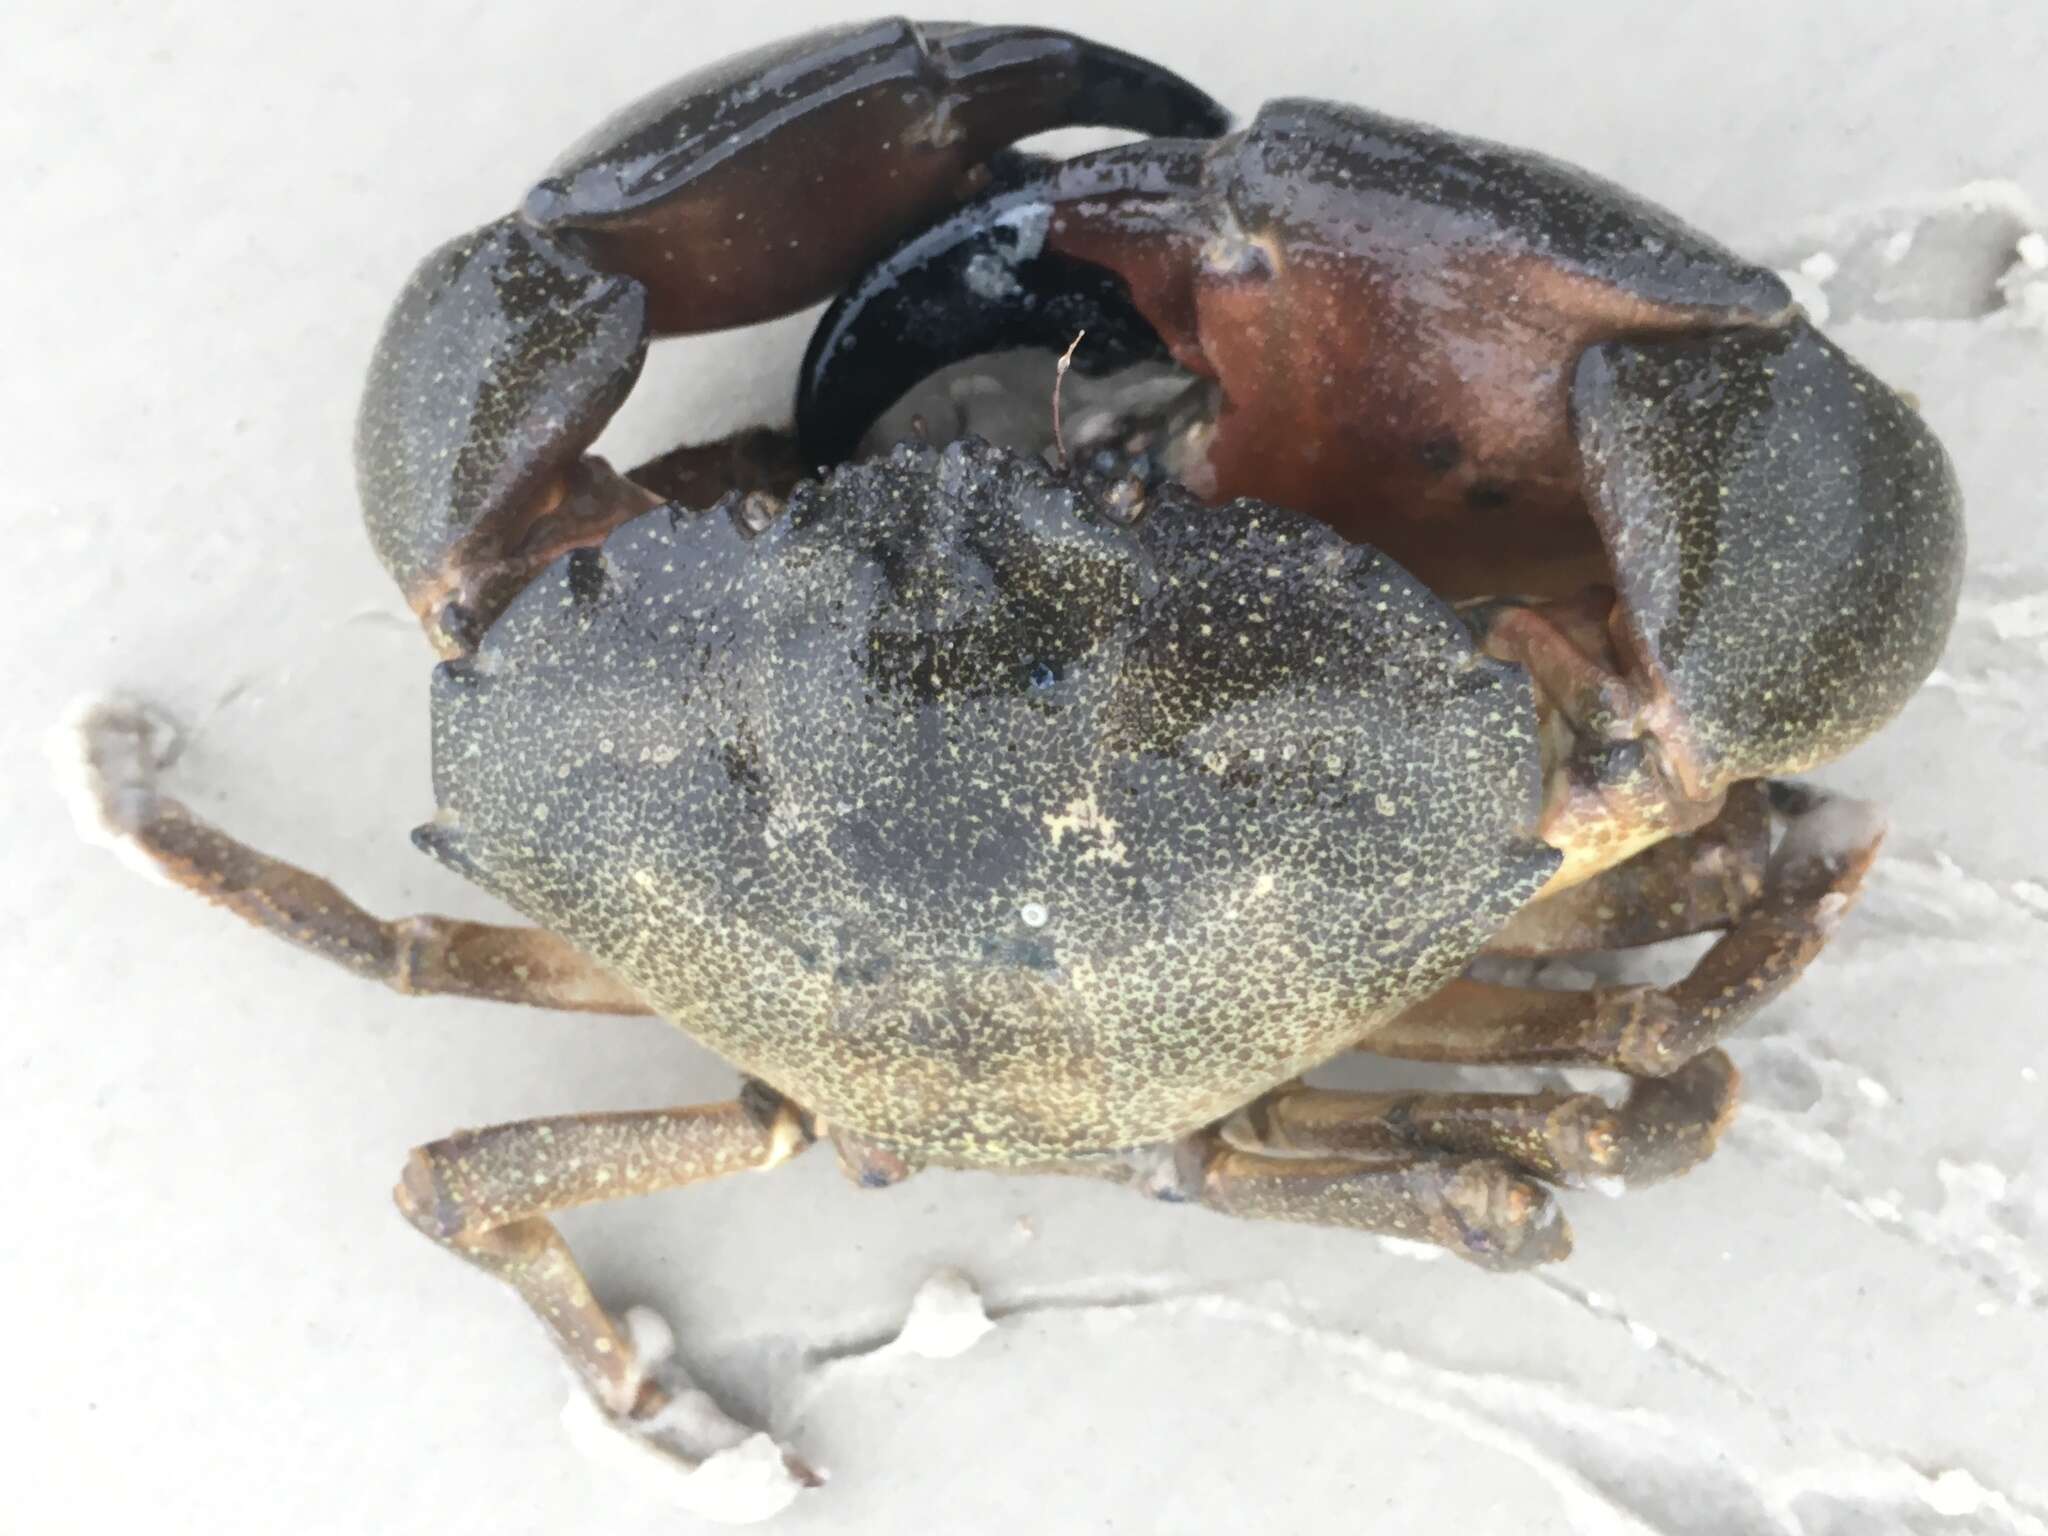 Image of Gulf stone crab